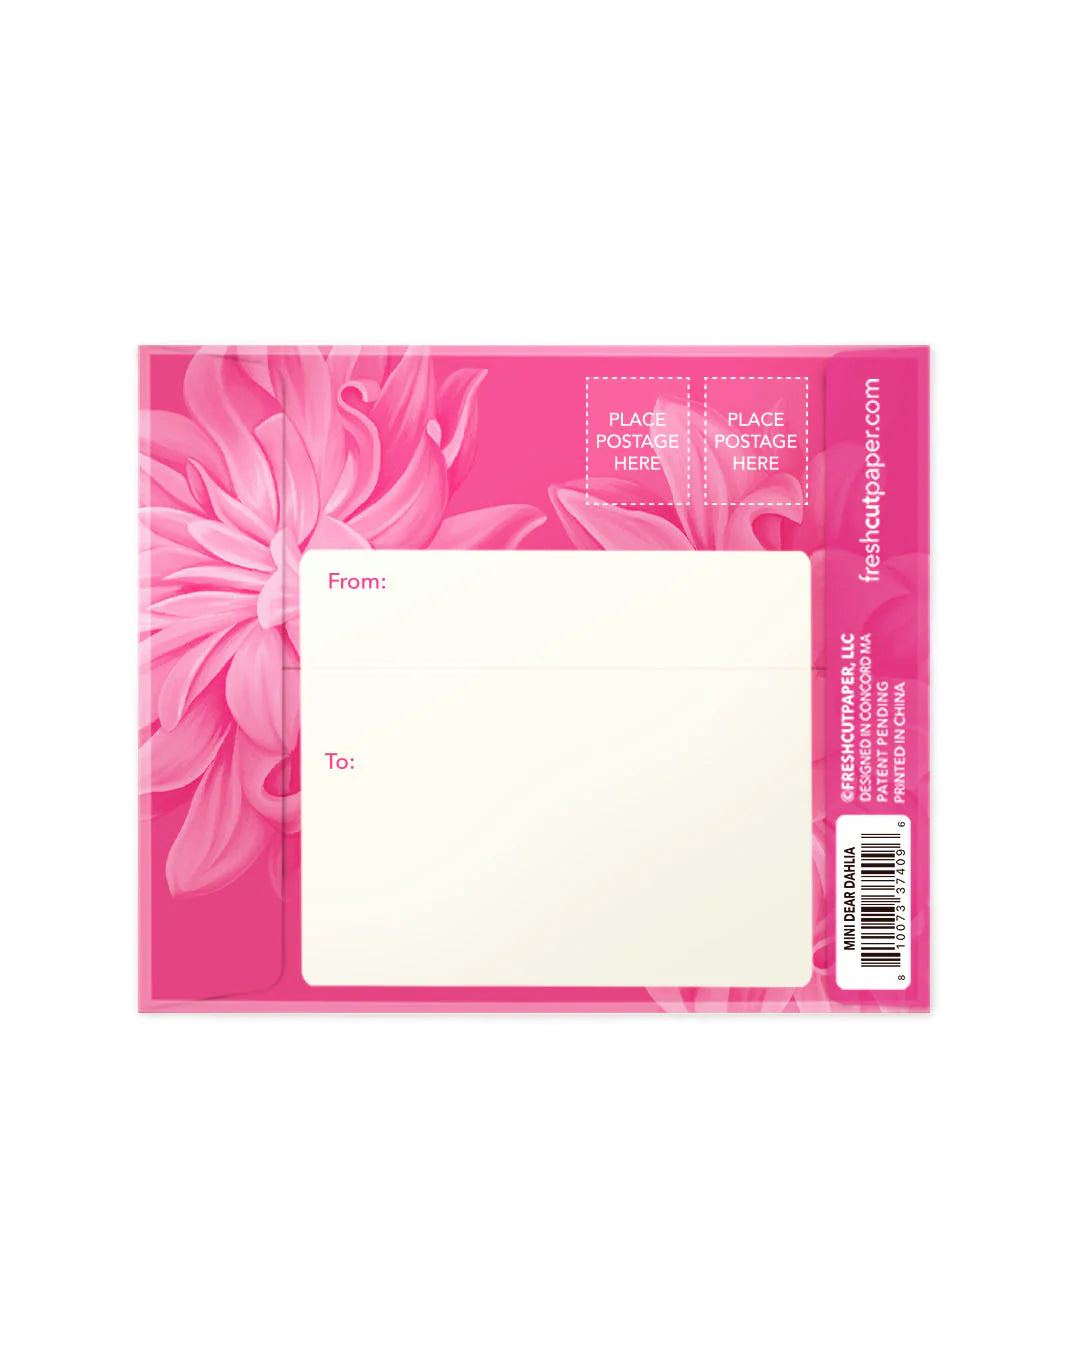 back view of pink mailing envelope.